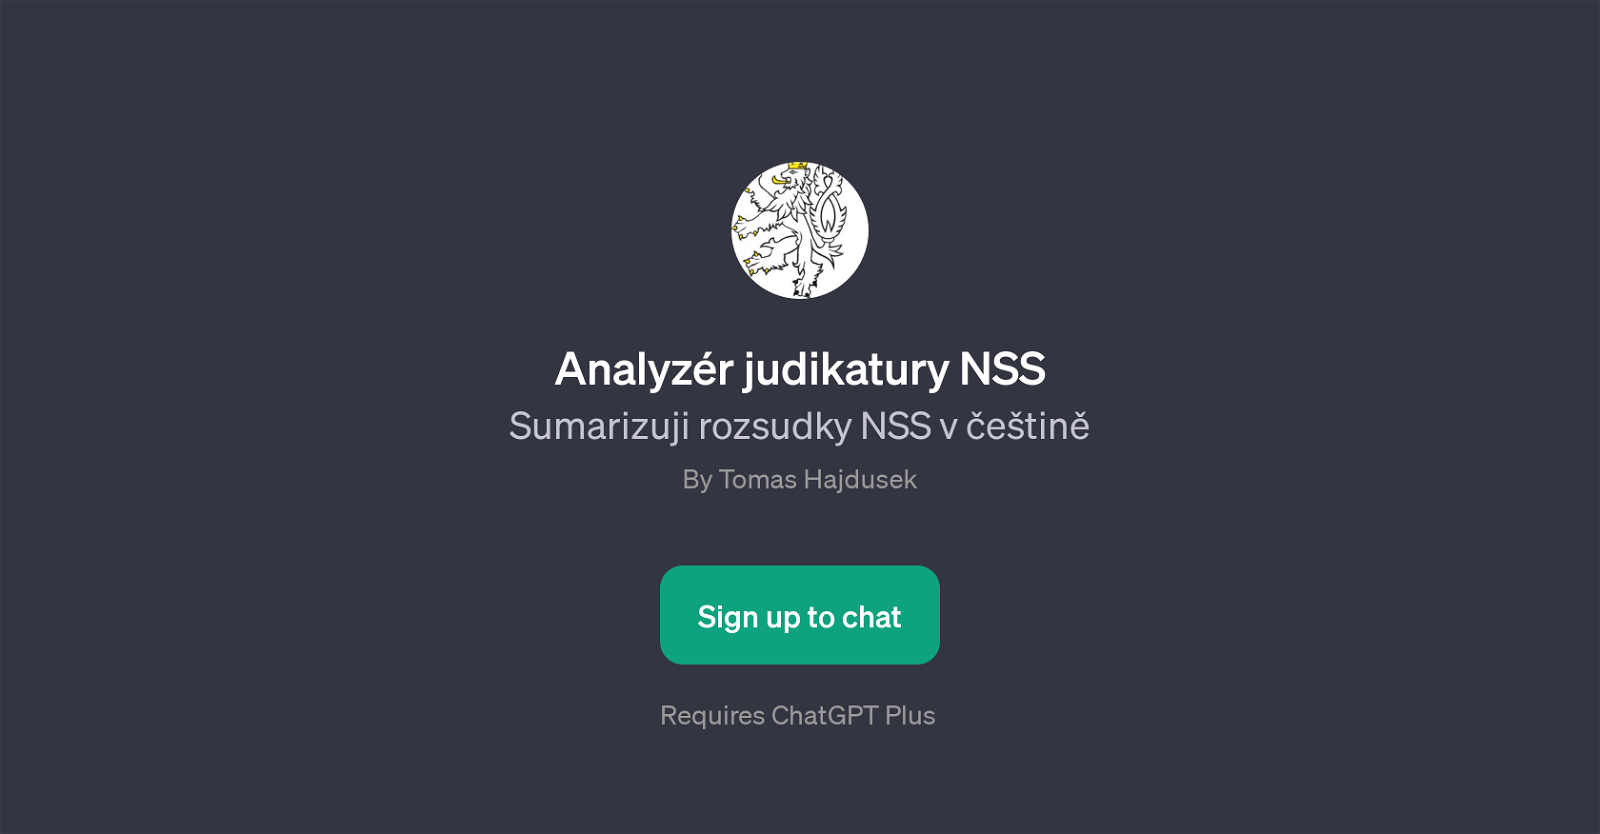 Analyzr judikatury NSS website